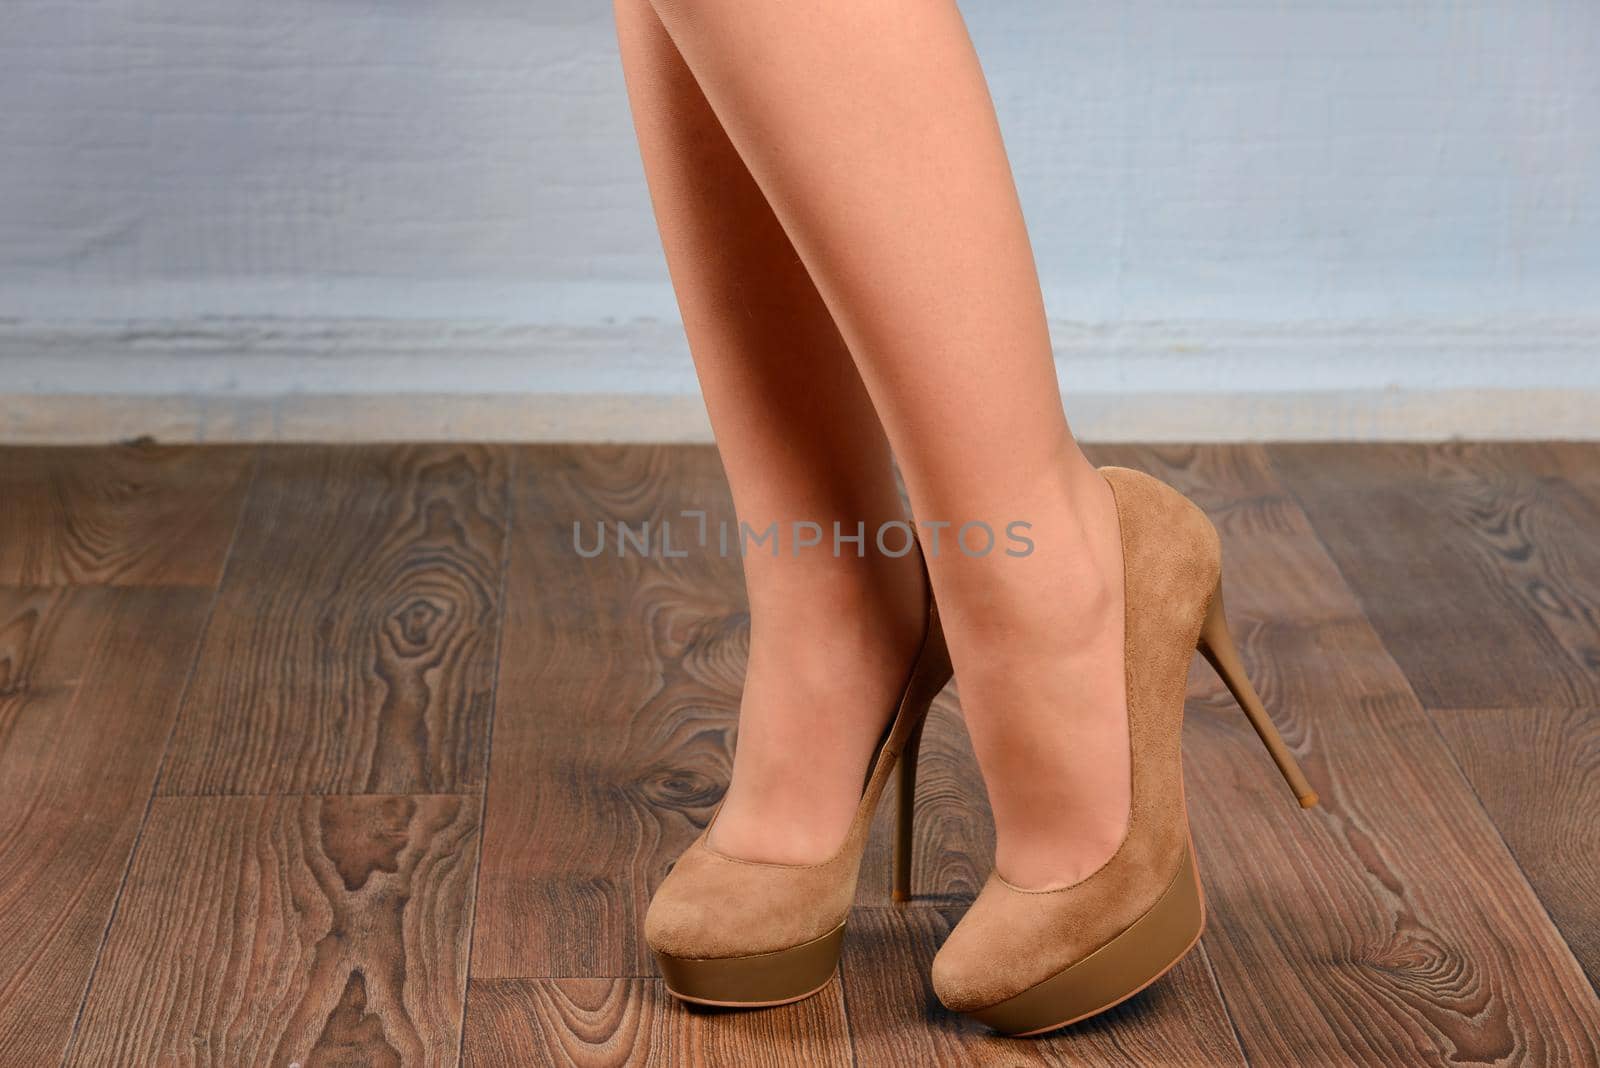 Girl in beige suede high-heeled shoes on the wooden floor